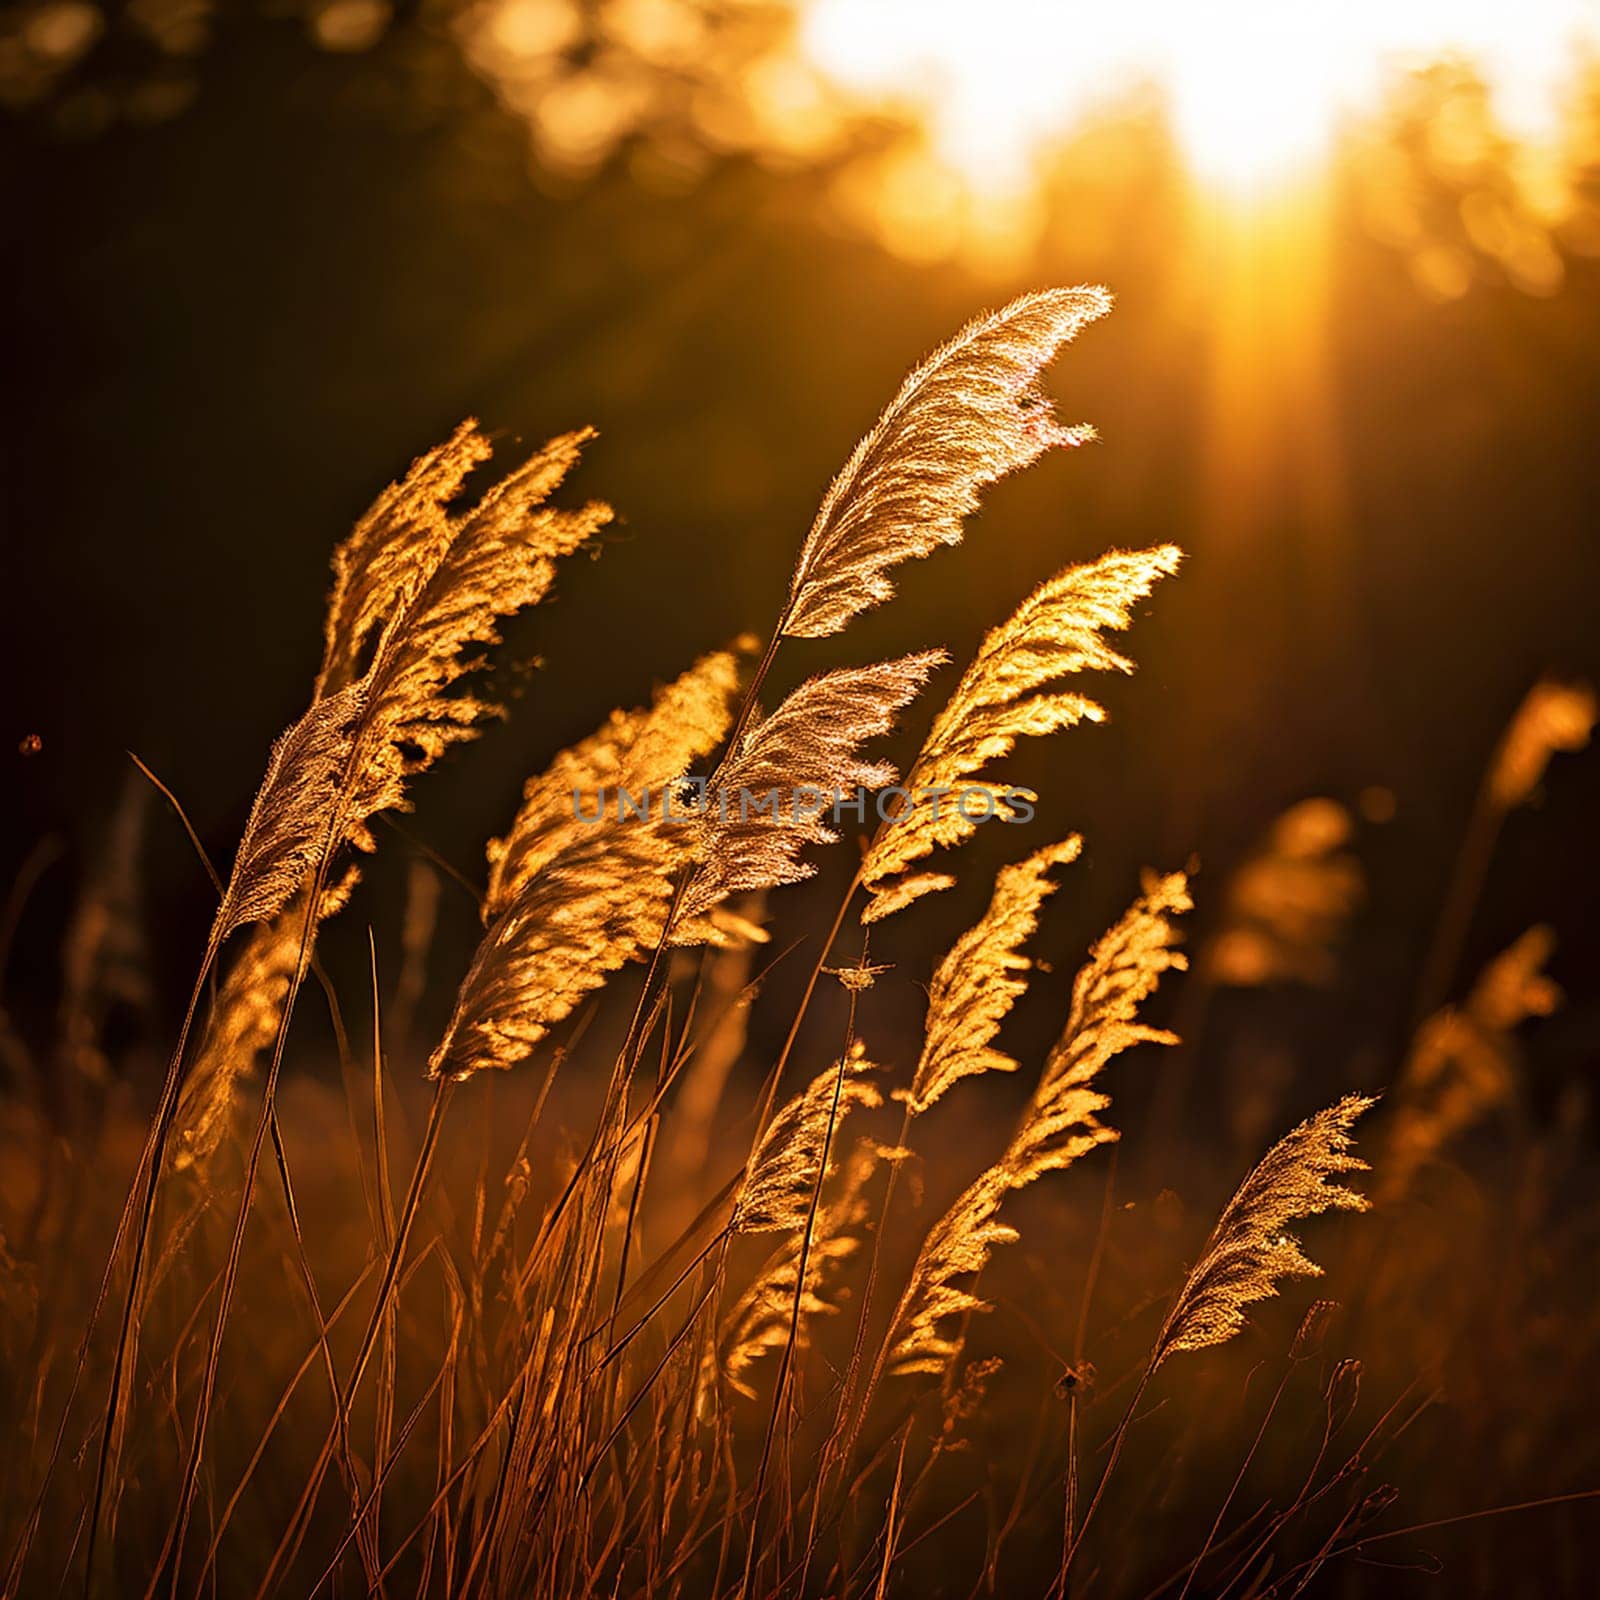 Golden Bliss: Warm Sunlight Illuminating the Blowing Wildgrass by Petrichor